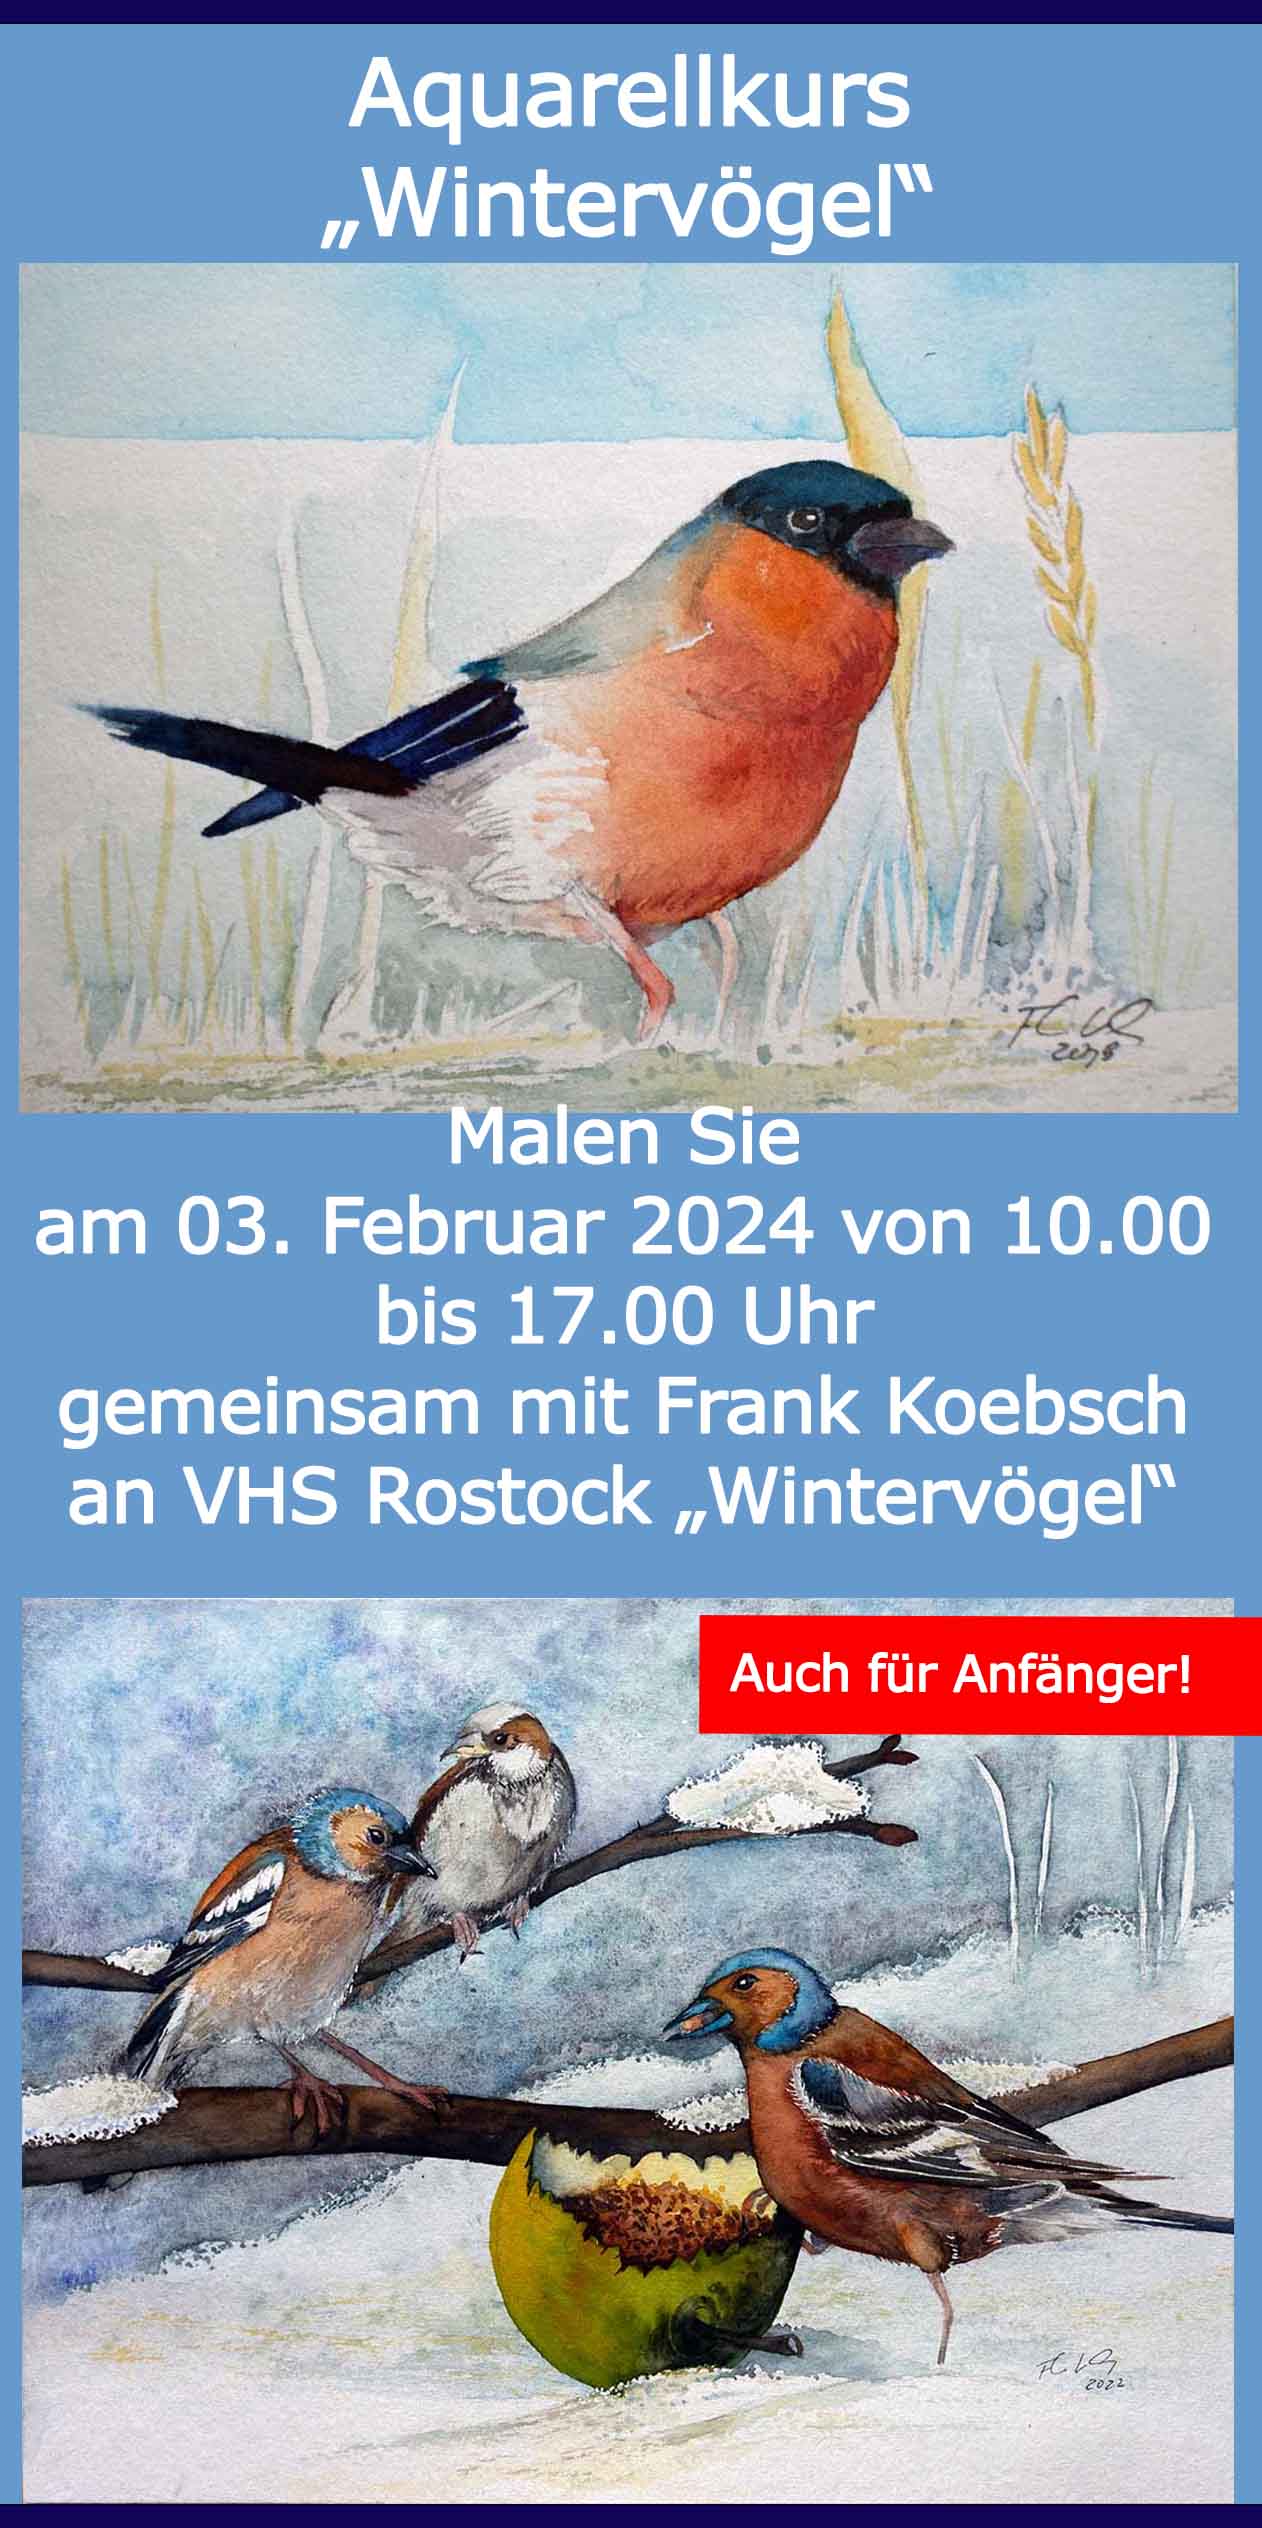 Aquarellkurs "Wintervögel" mit Frank Koebsch